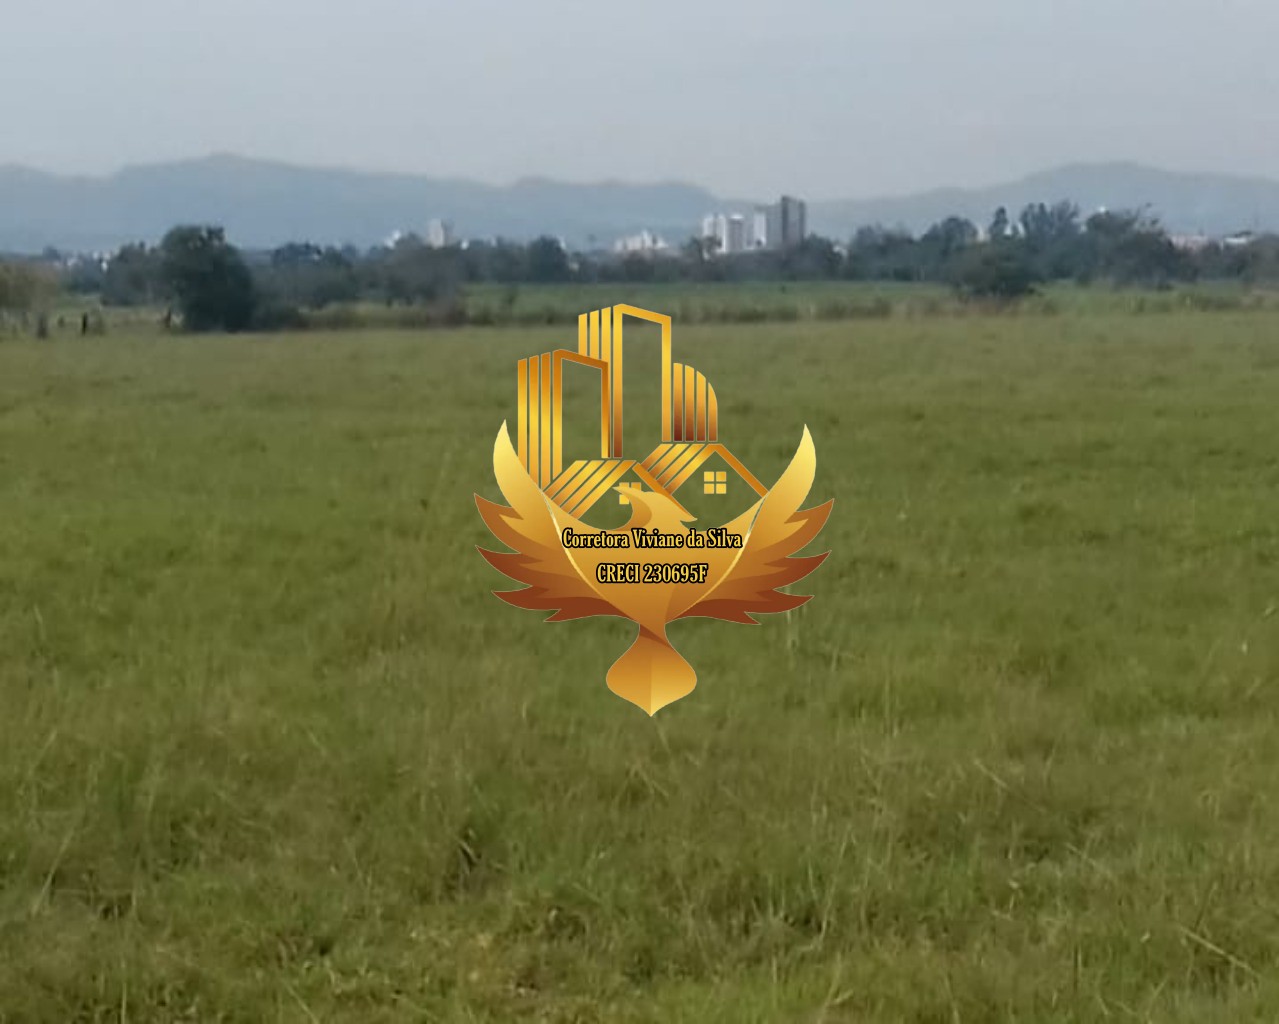 Terreno de 2 ha em Pindamonhangaba, SP